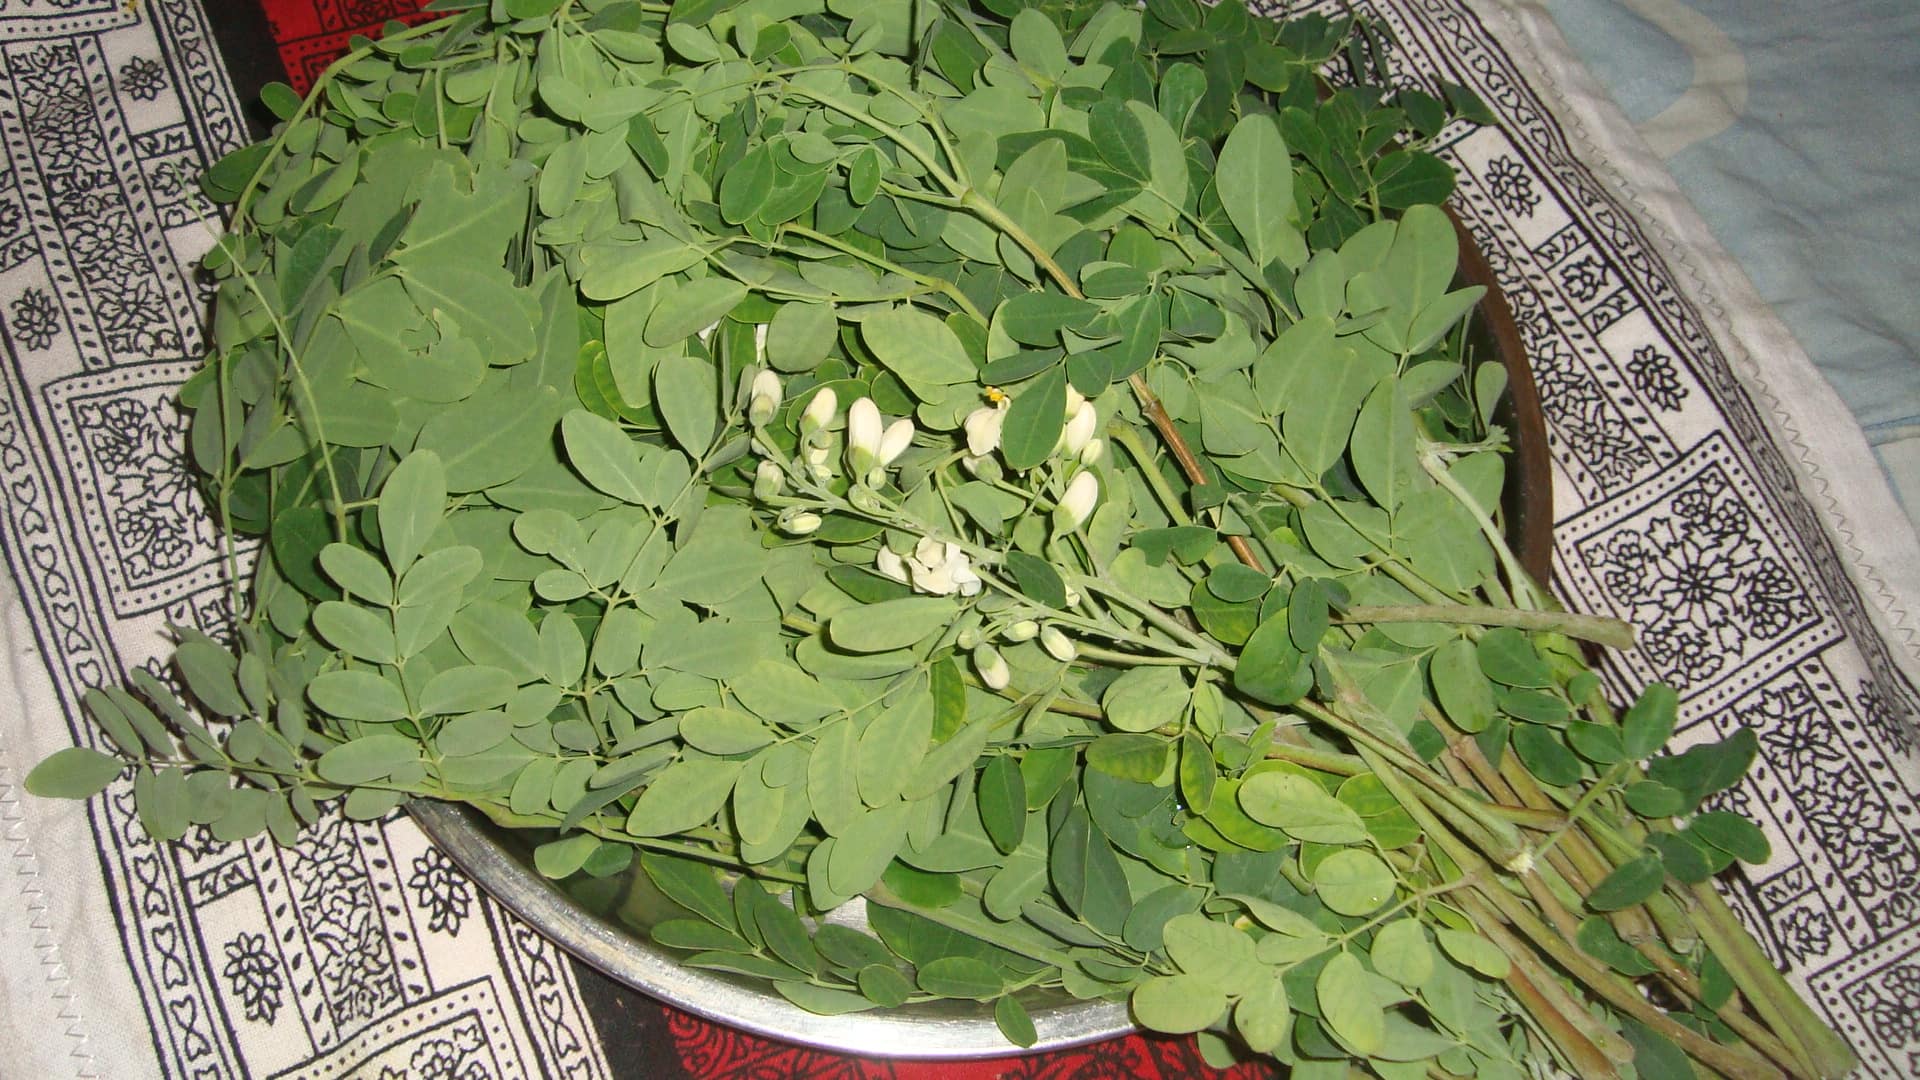 benefits of green leafy vegetables